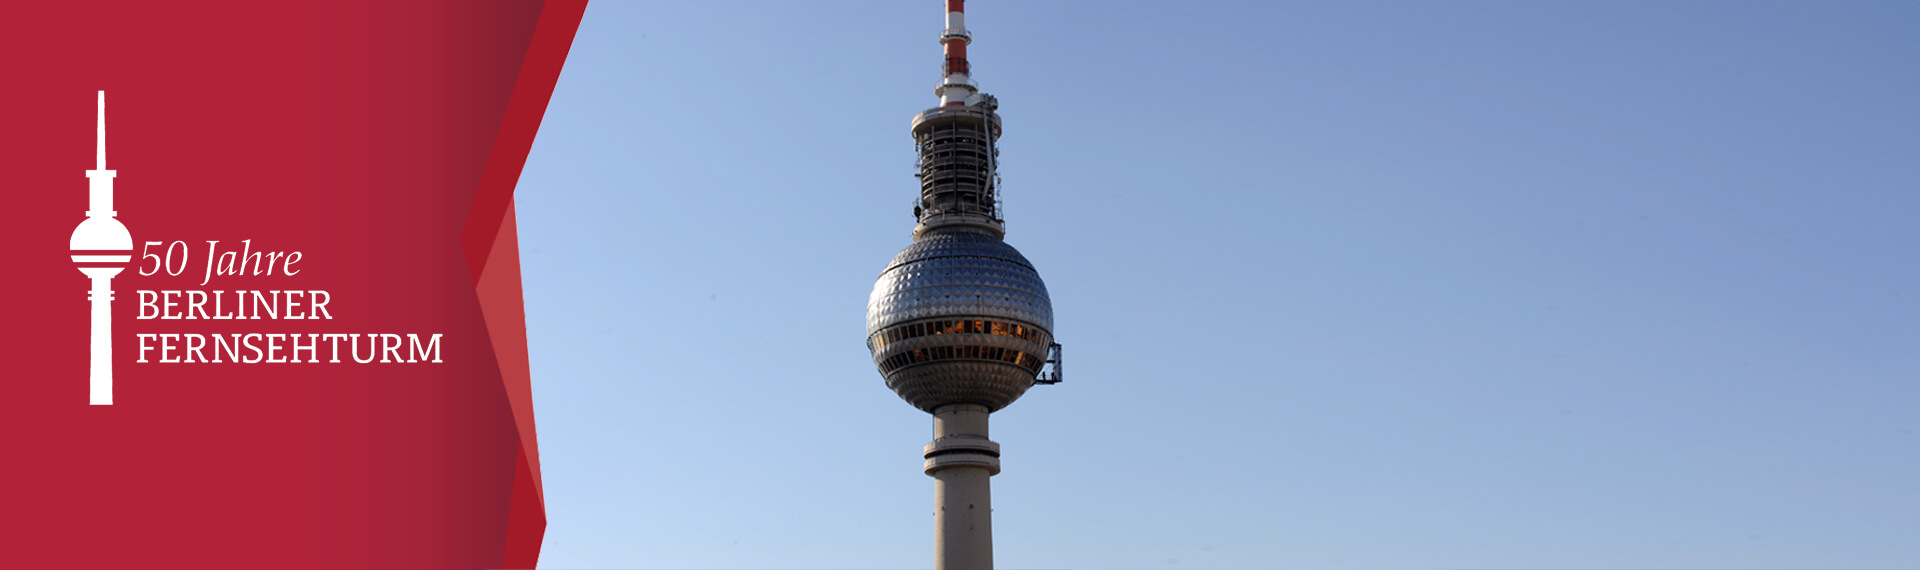 Banner zum 50 jährigen Jubiläum des Berliner Fernsehturms